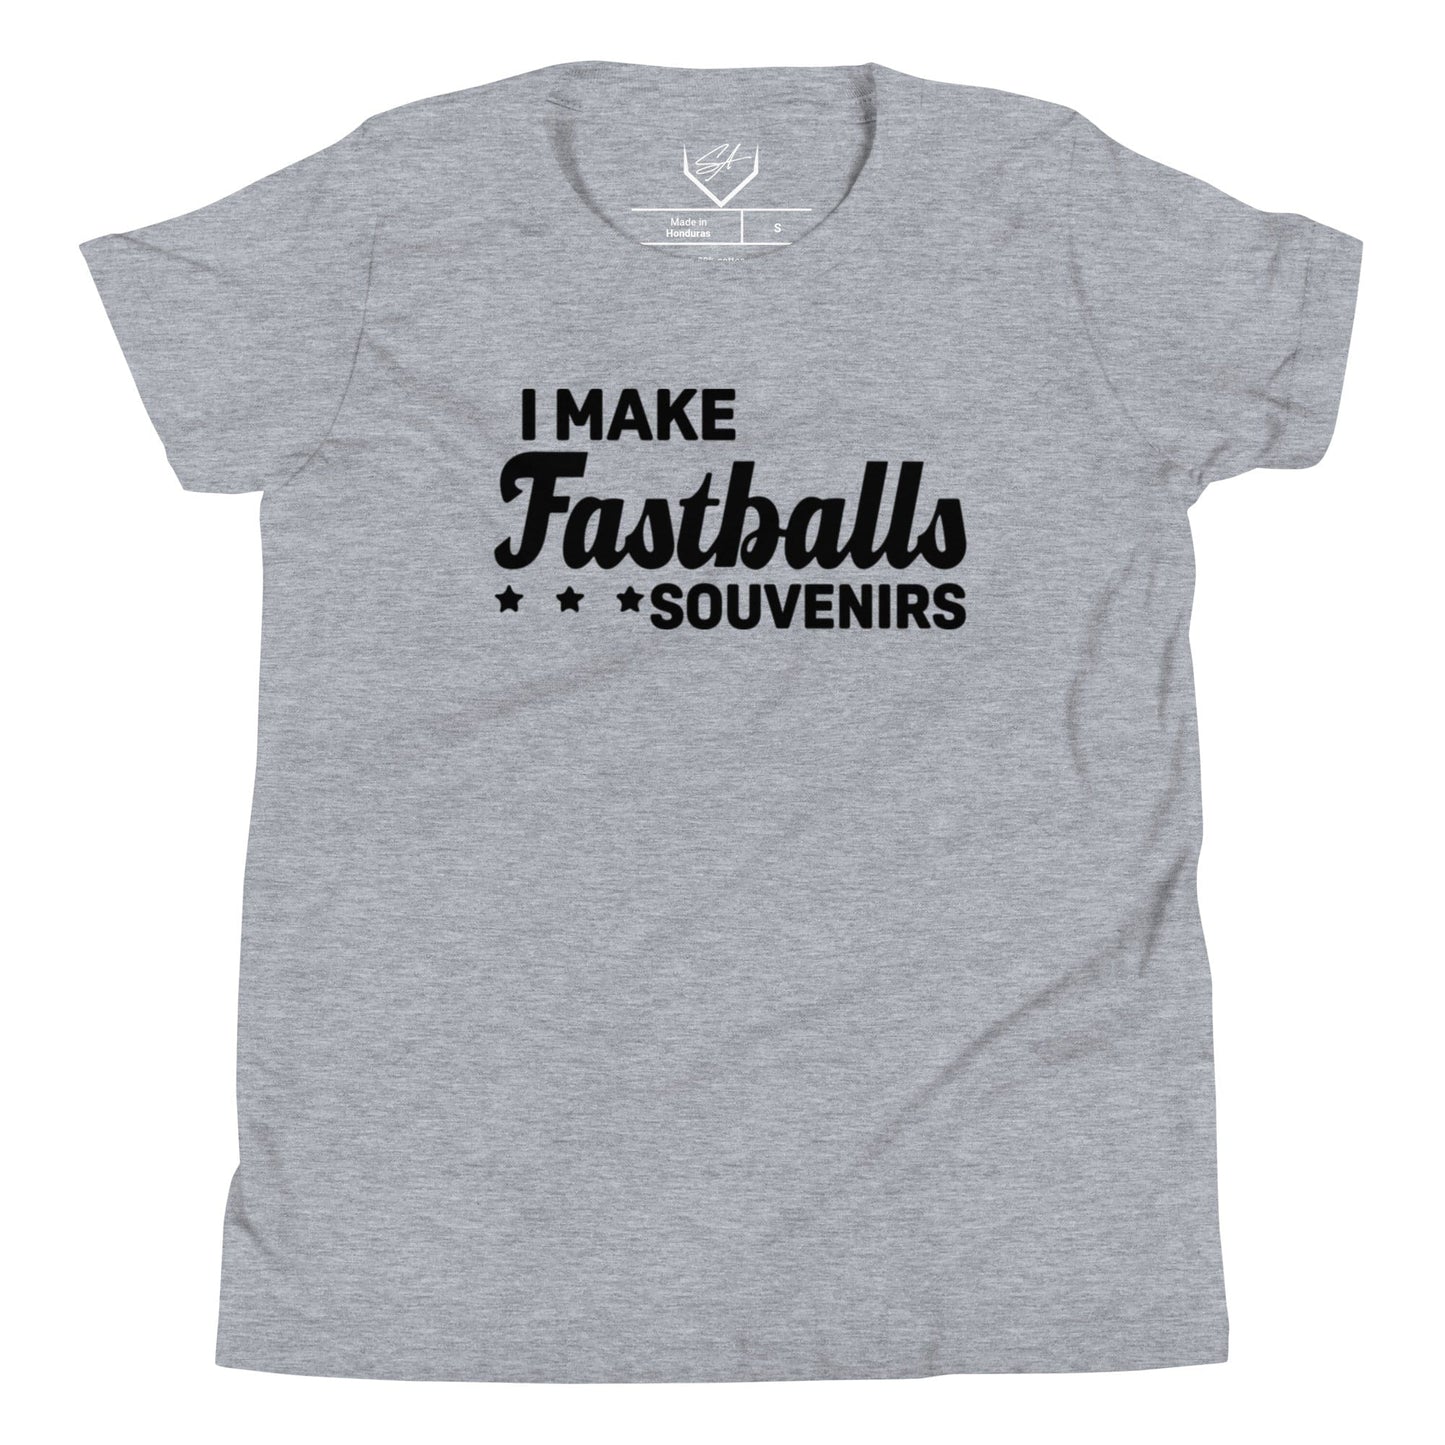 I Make Fastballs Souvenirs - Youth Tee